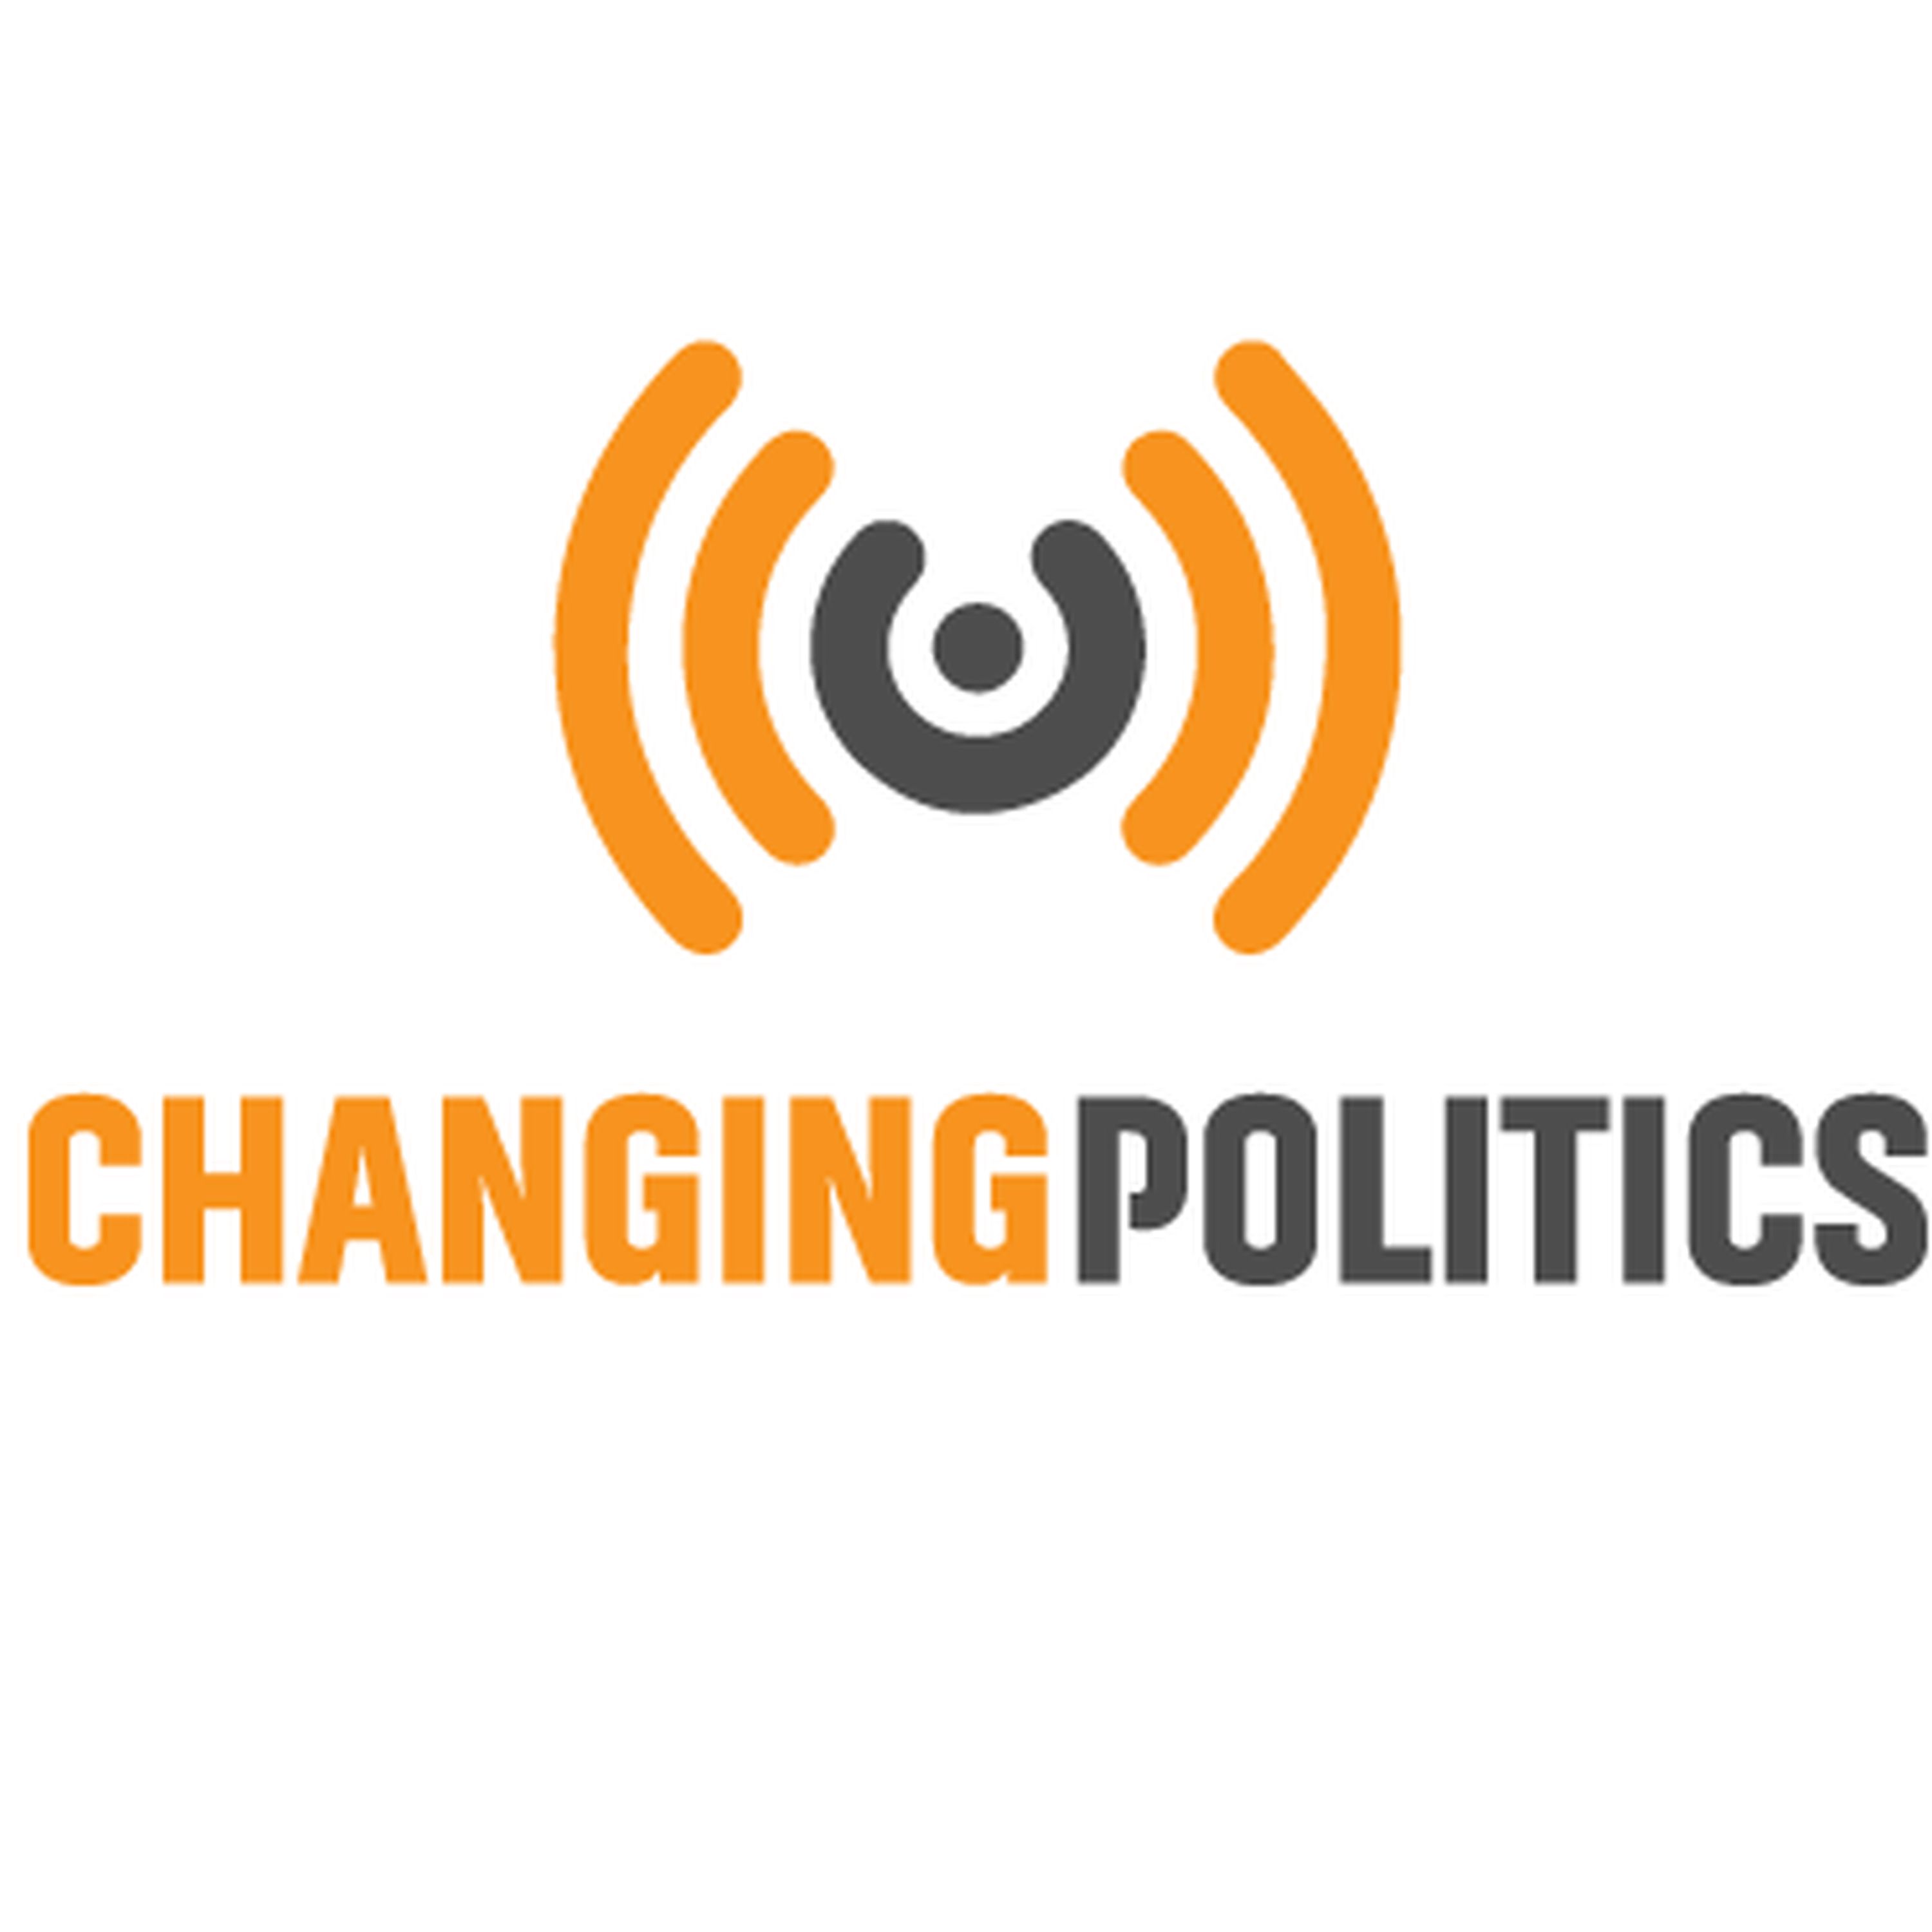 Changing Politics - Trailer